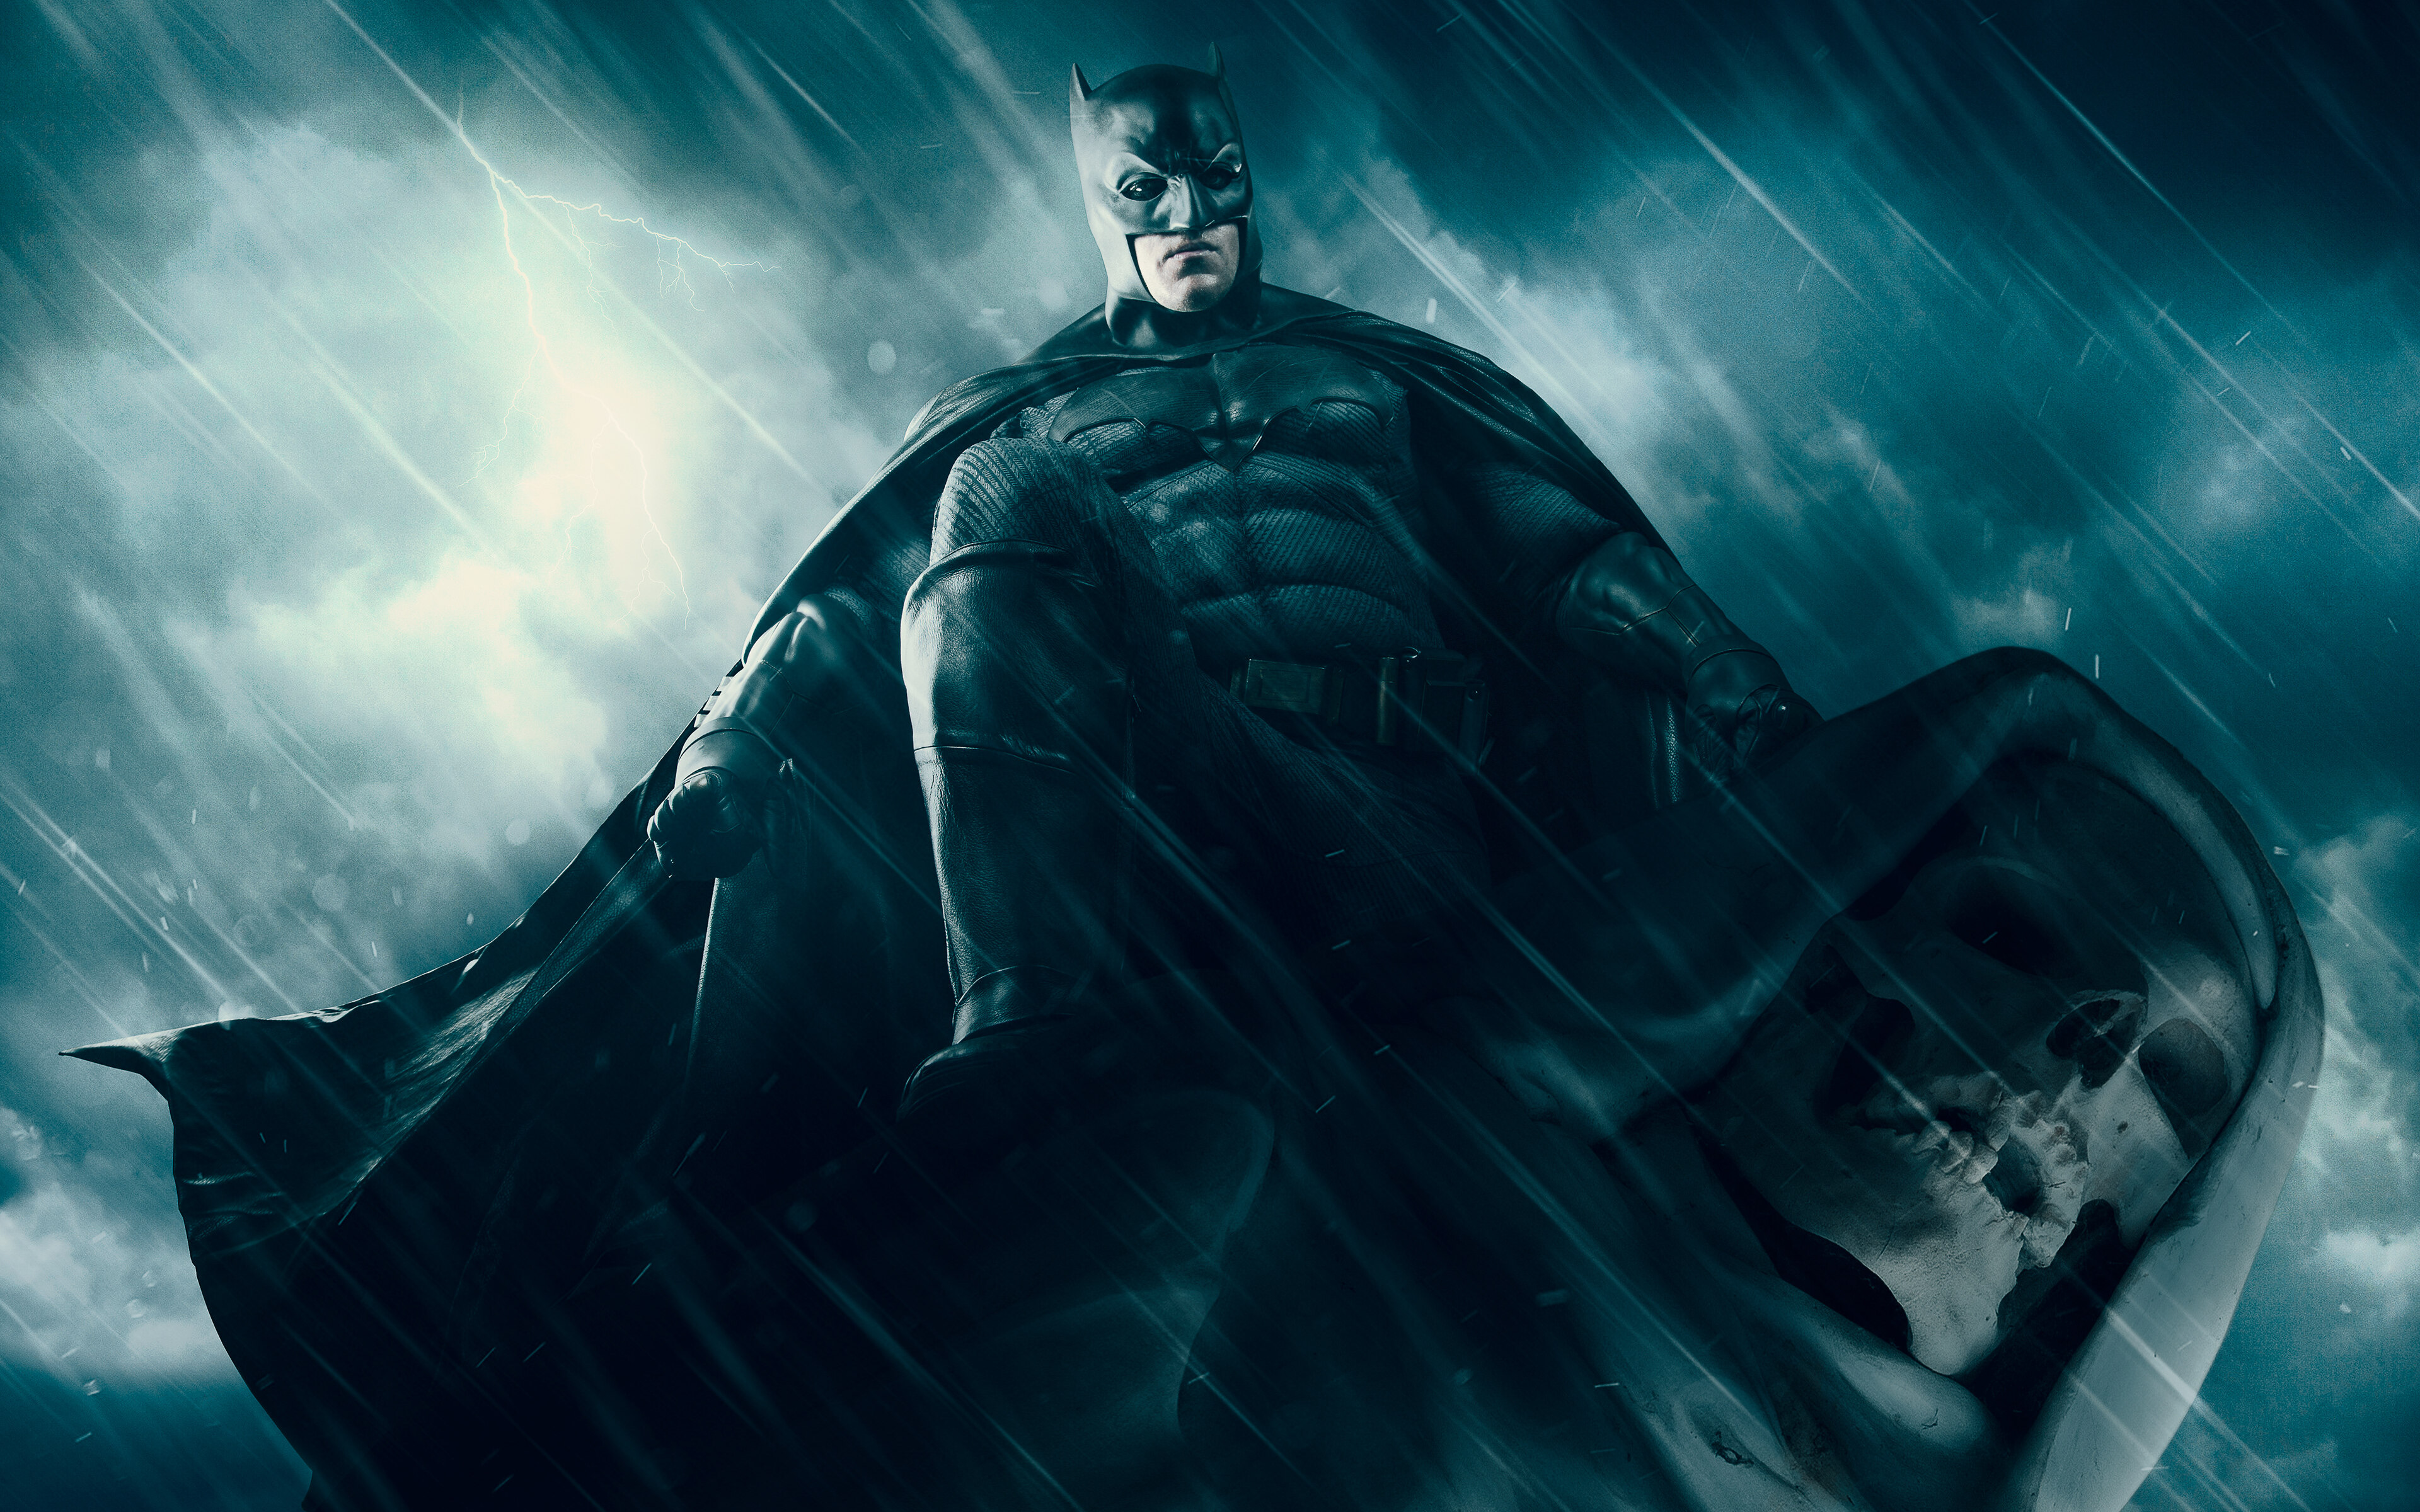 Batman 4k Dark Knight 4k HD 4k Wallpaper, Image, Background, Photo and Picture